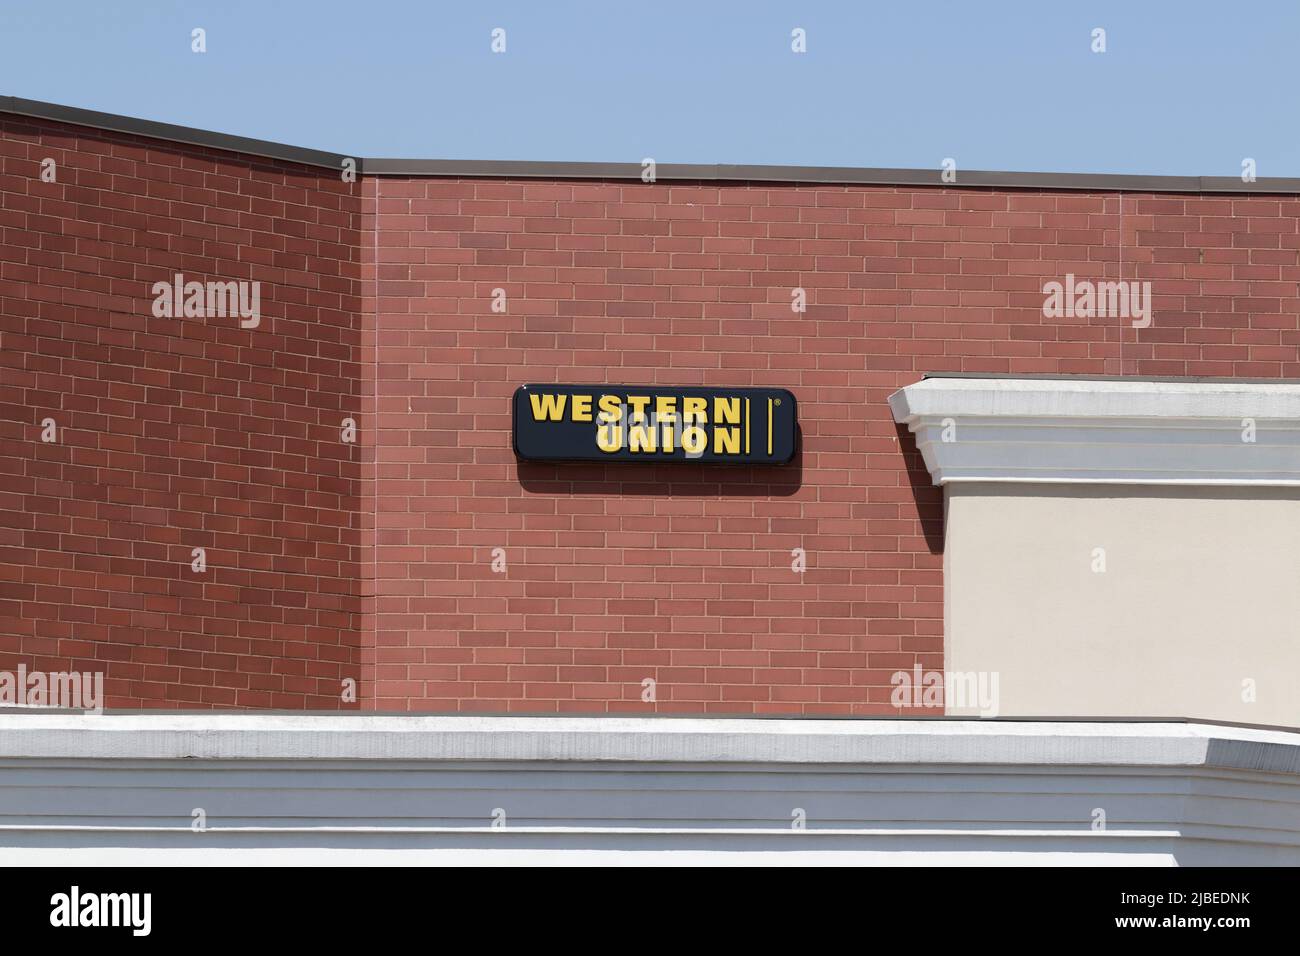 Western Union building in Hialeah, Florida Stock Photo - Alamy